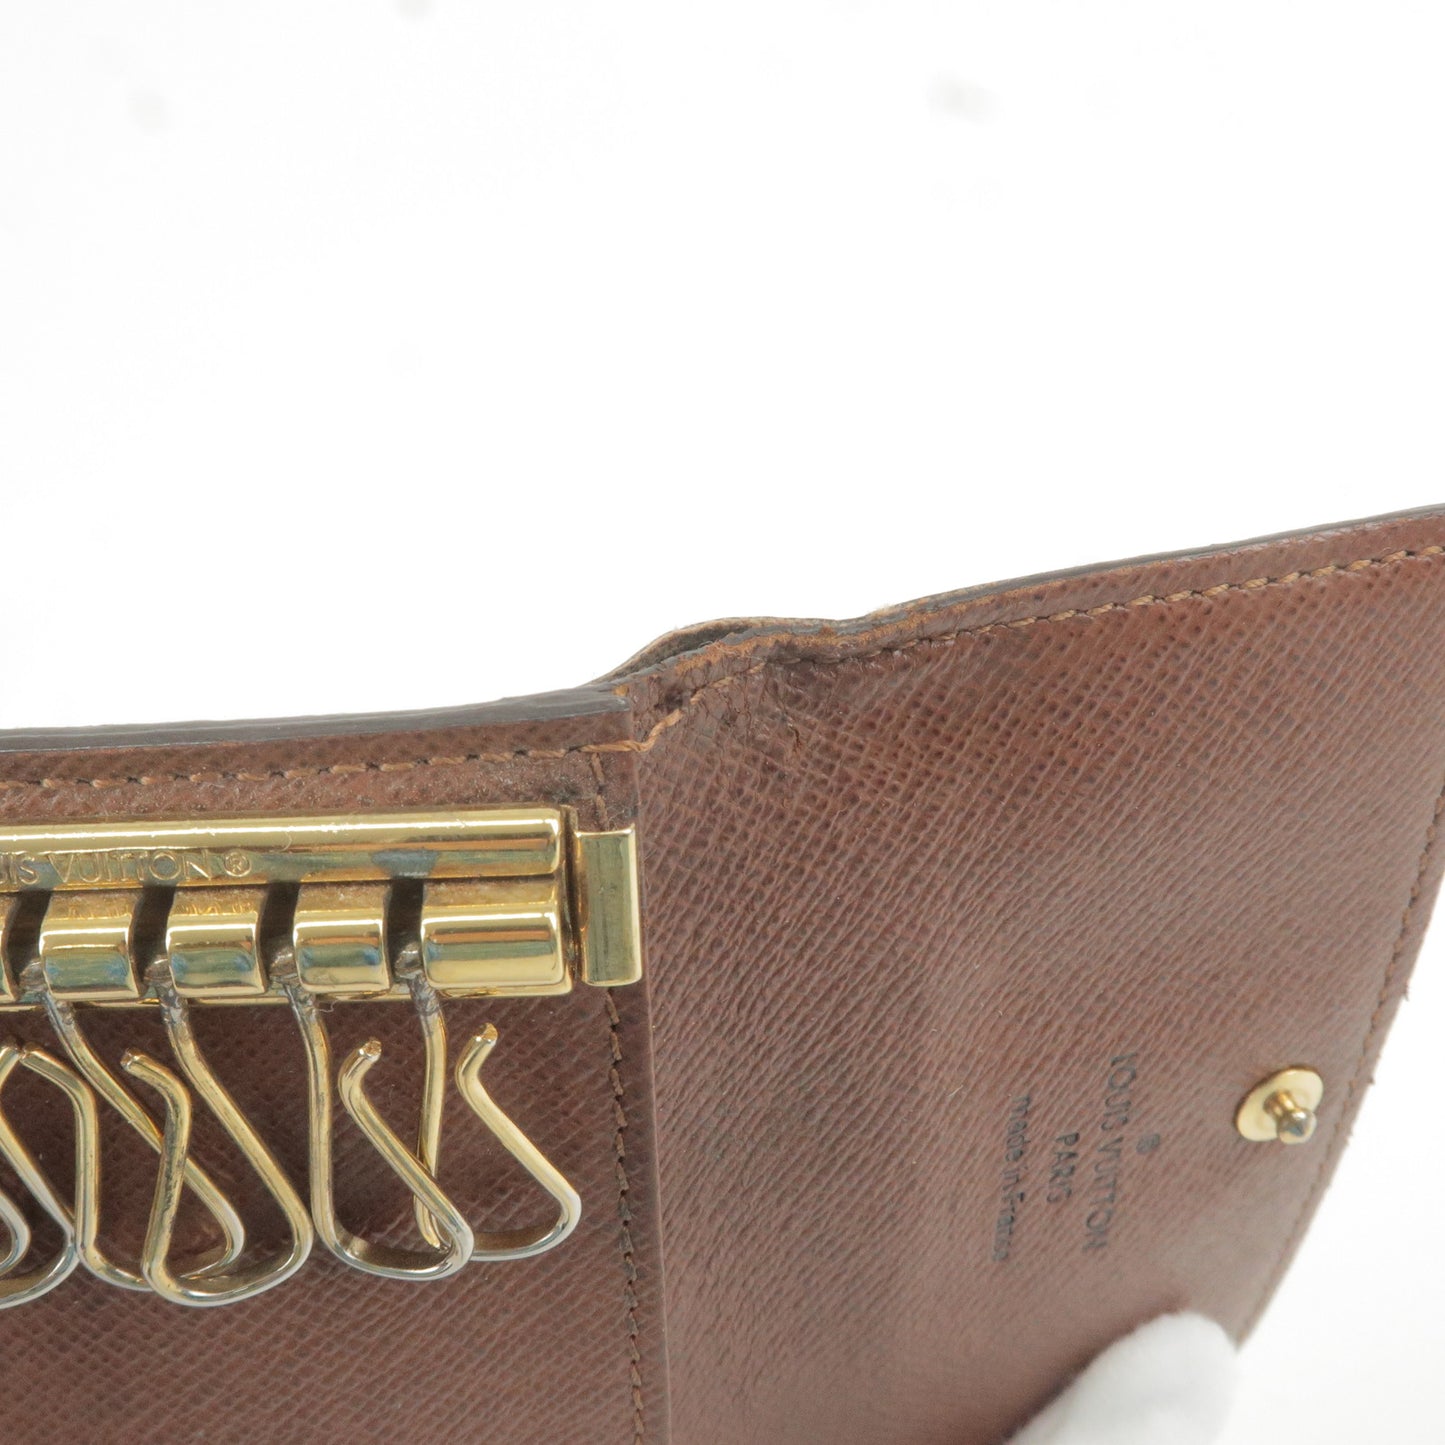 Shop Louis Vuitton MULTICLES 6 key holder (M62630) by Lobelialaan.home